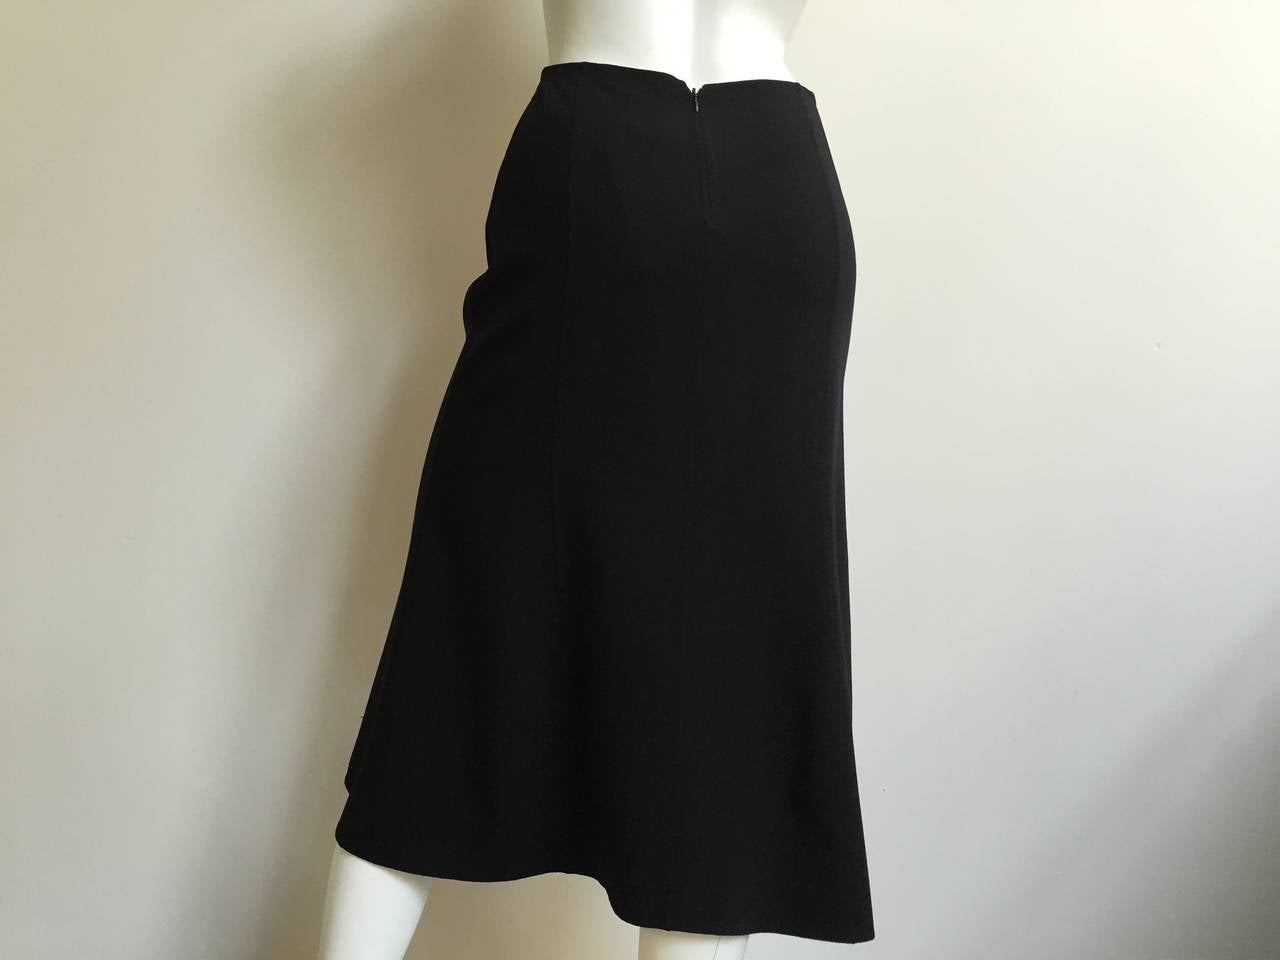 Celine black wool skirt size 4/6. 1